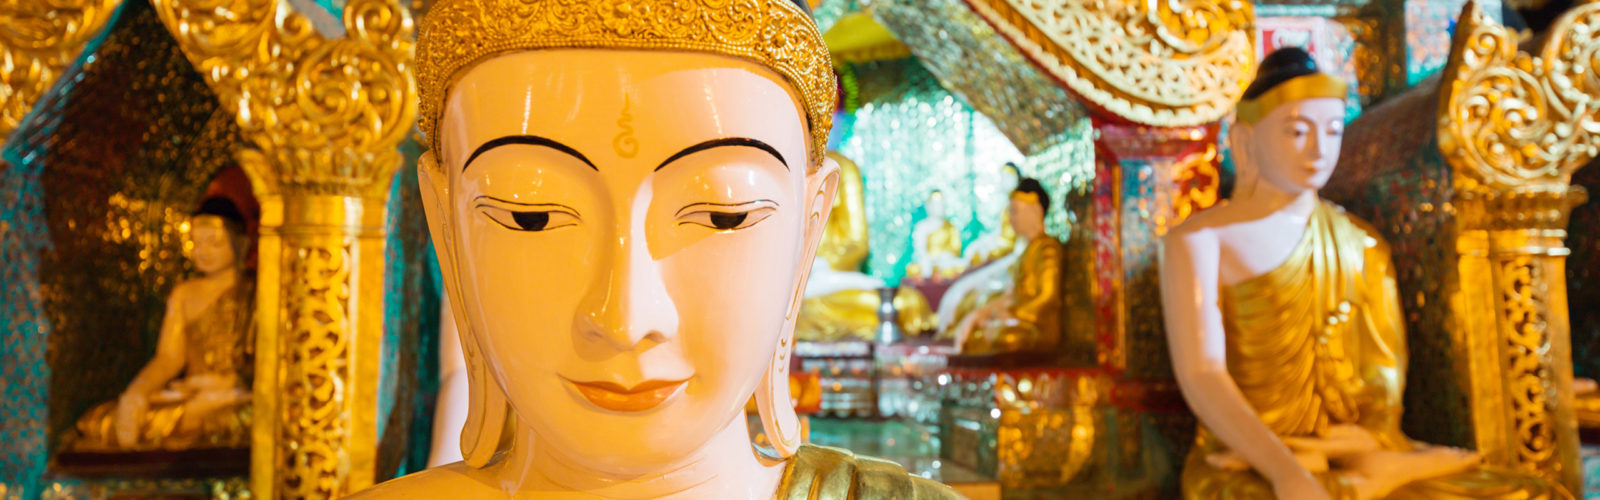 myanmar-buddha